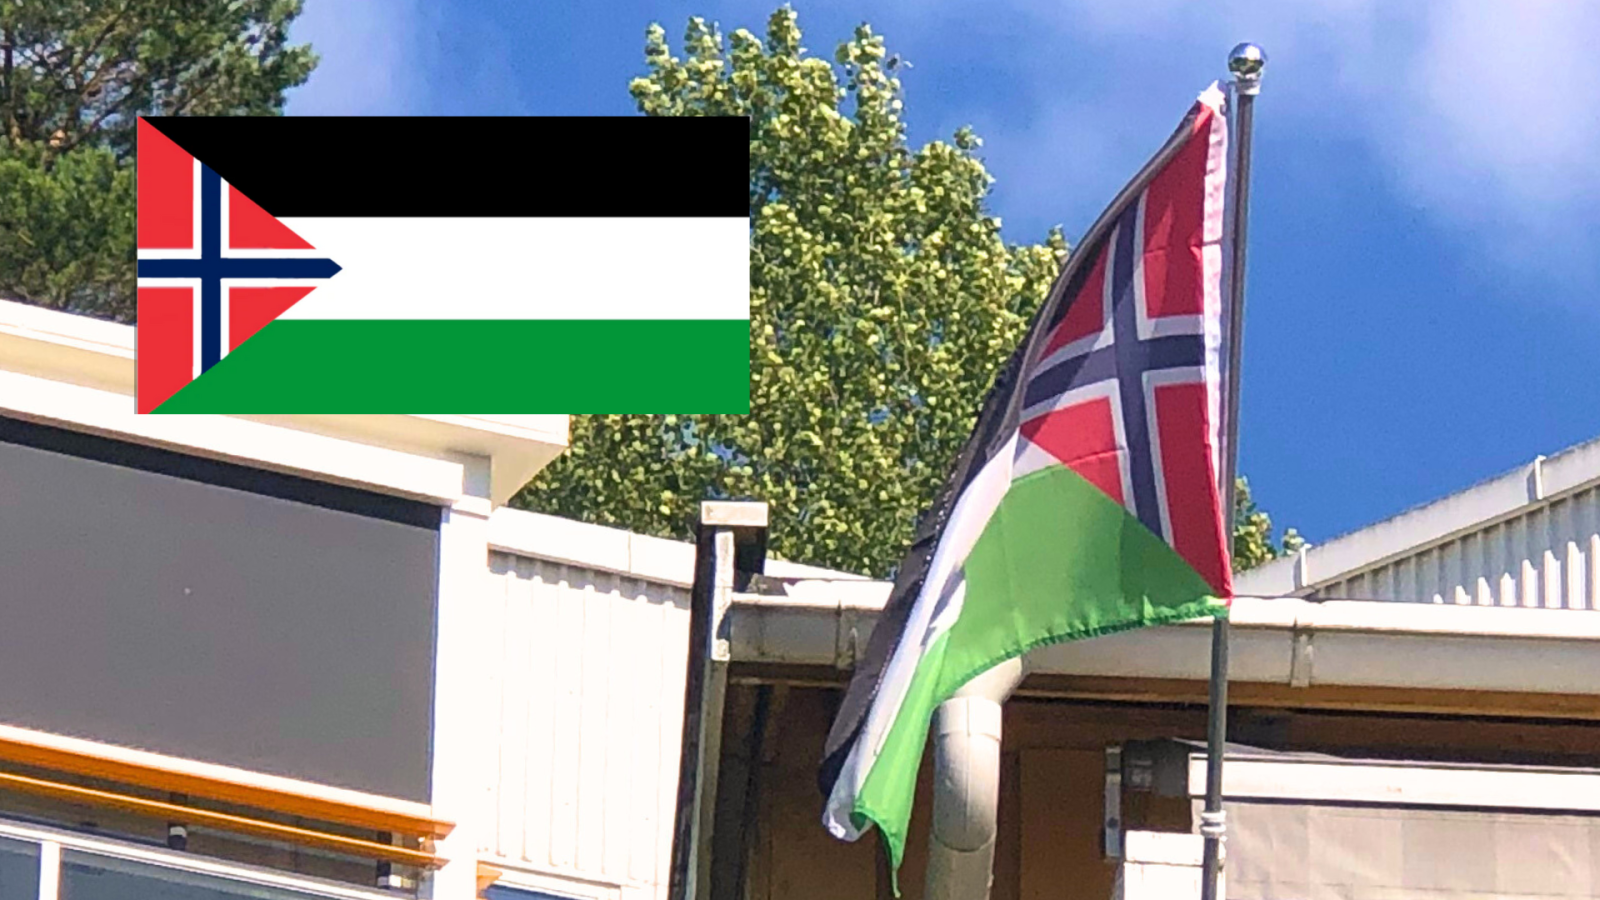 Designer sells “Norwegian-Palestine” flag